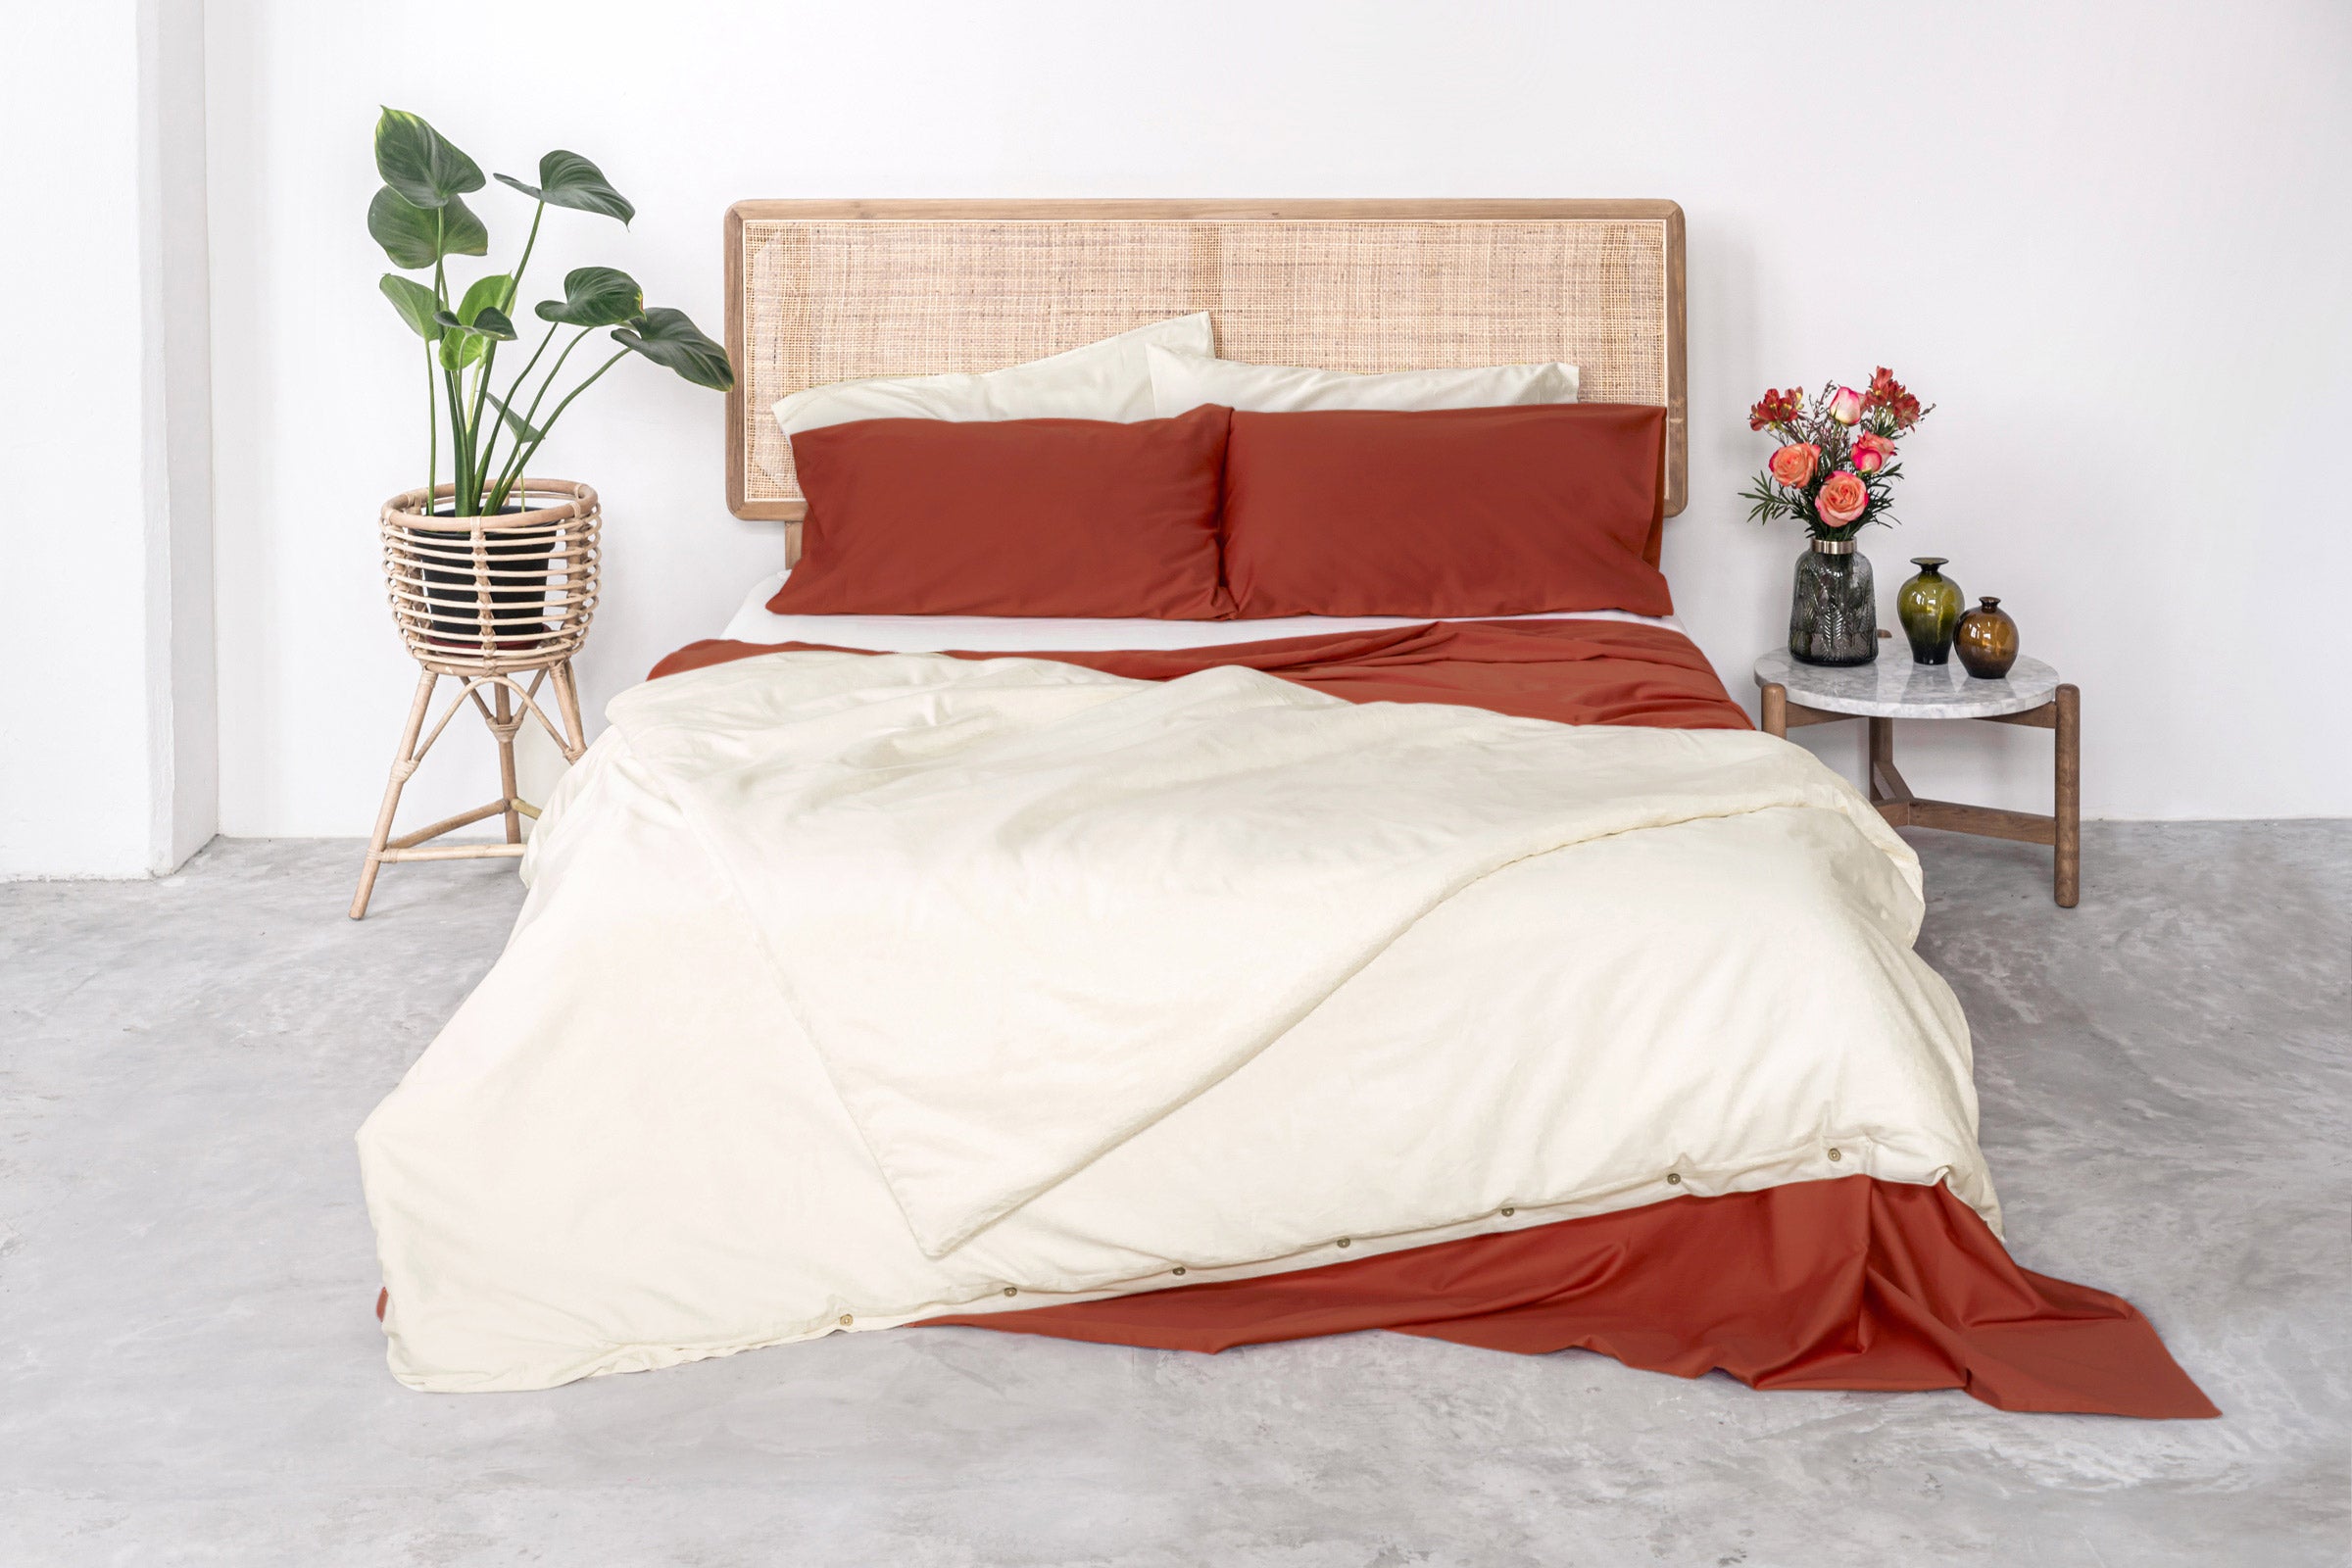 classic-natural-flat-sheet-fitted-sheet-pillowcase-pair-navy-duvet-cover-pillowcase-pair-body-pillow-by-sojao.jpg